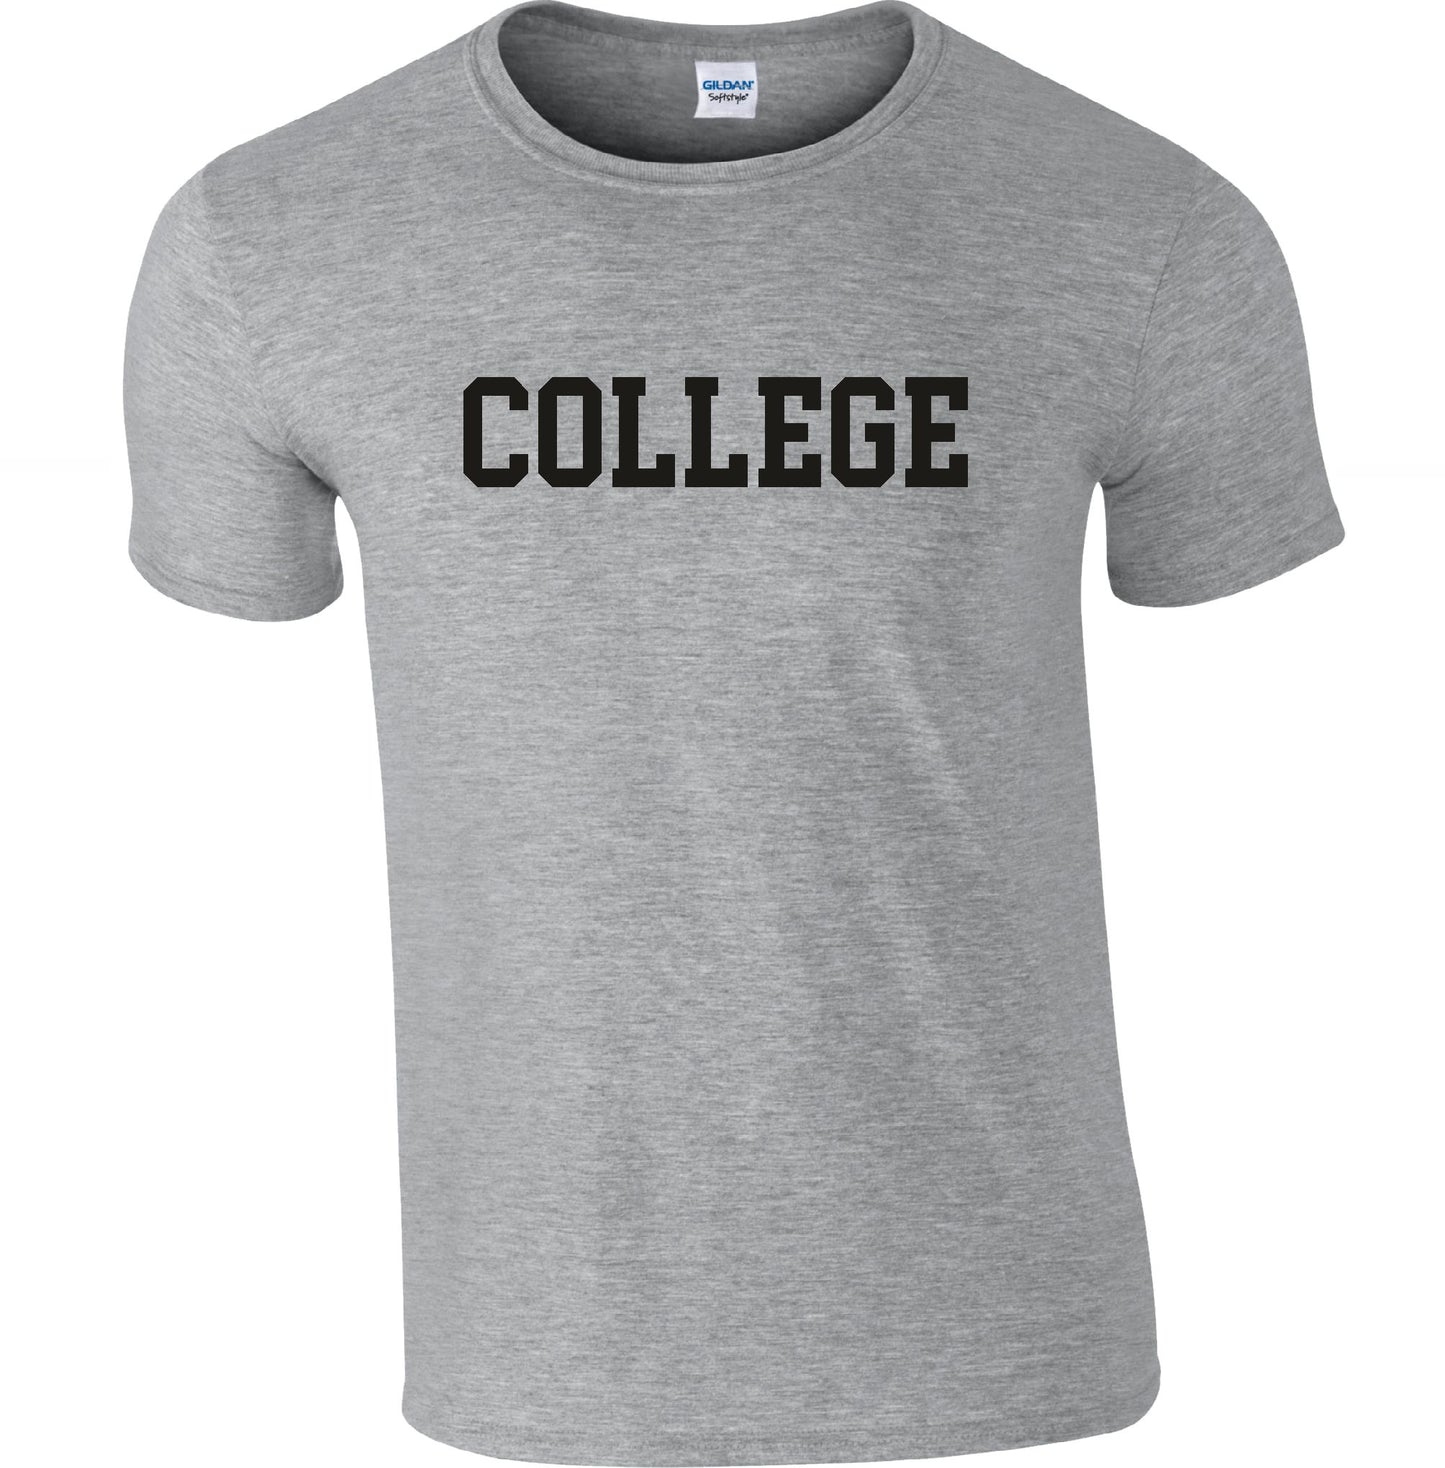 College T-Shirt - Retro Varsity Style, Football, Animal House, Various Colours